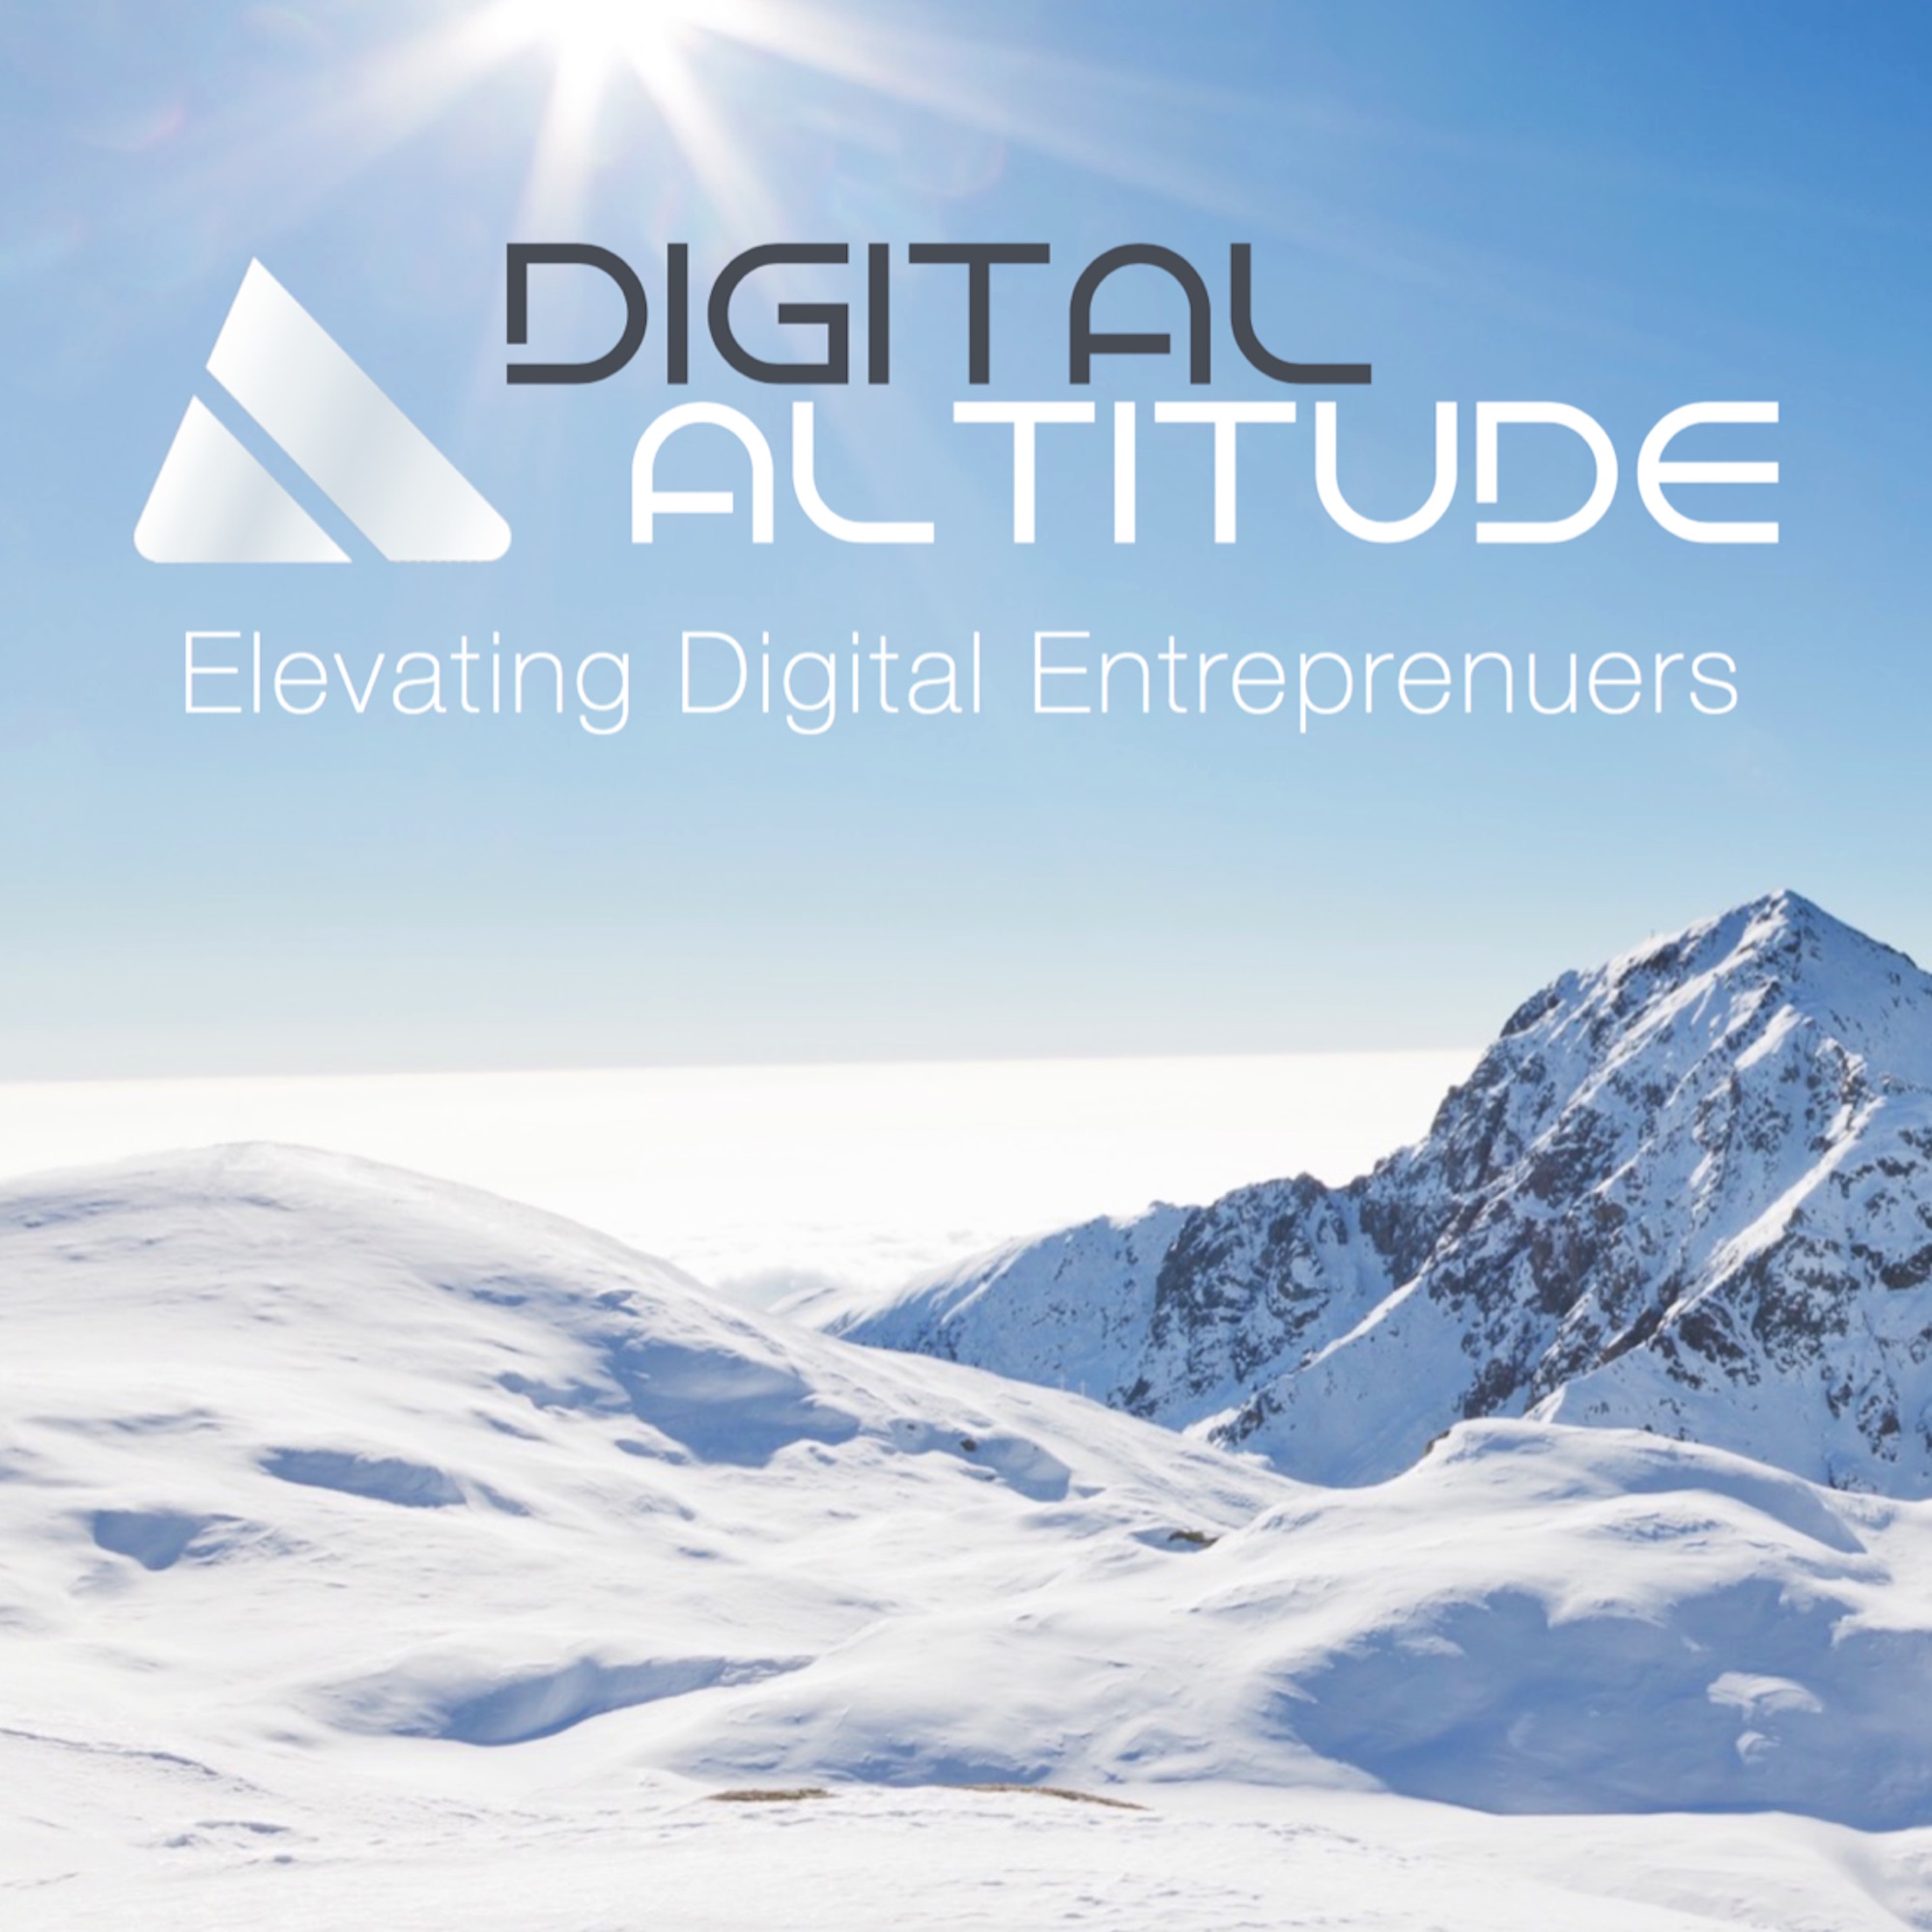 Digital Altitude